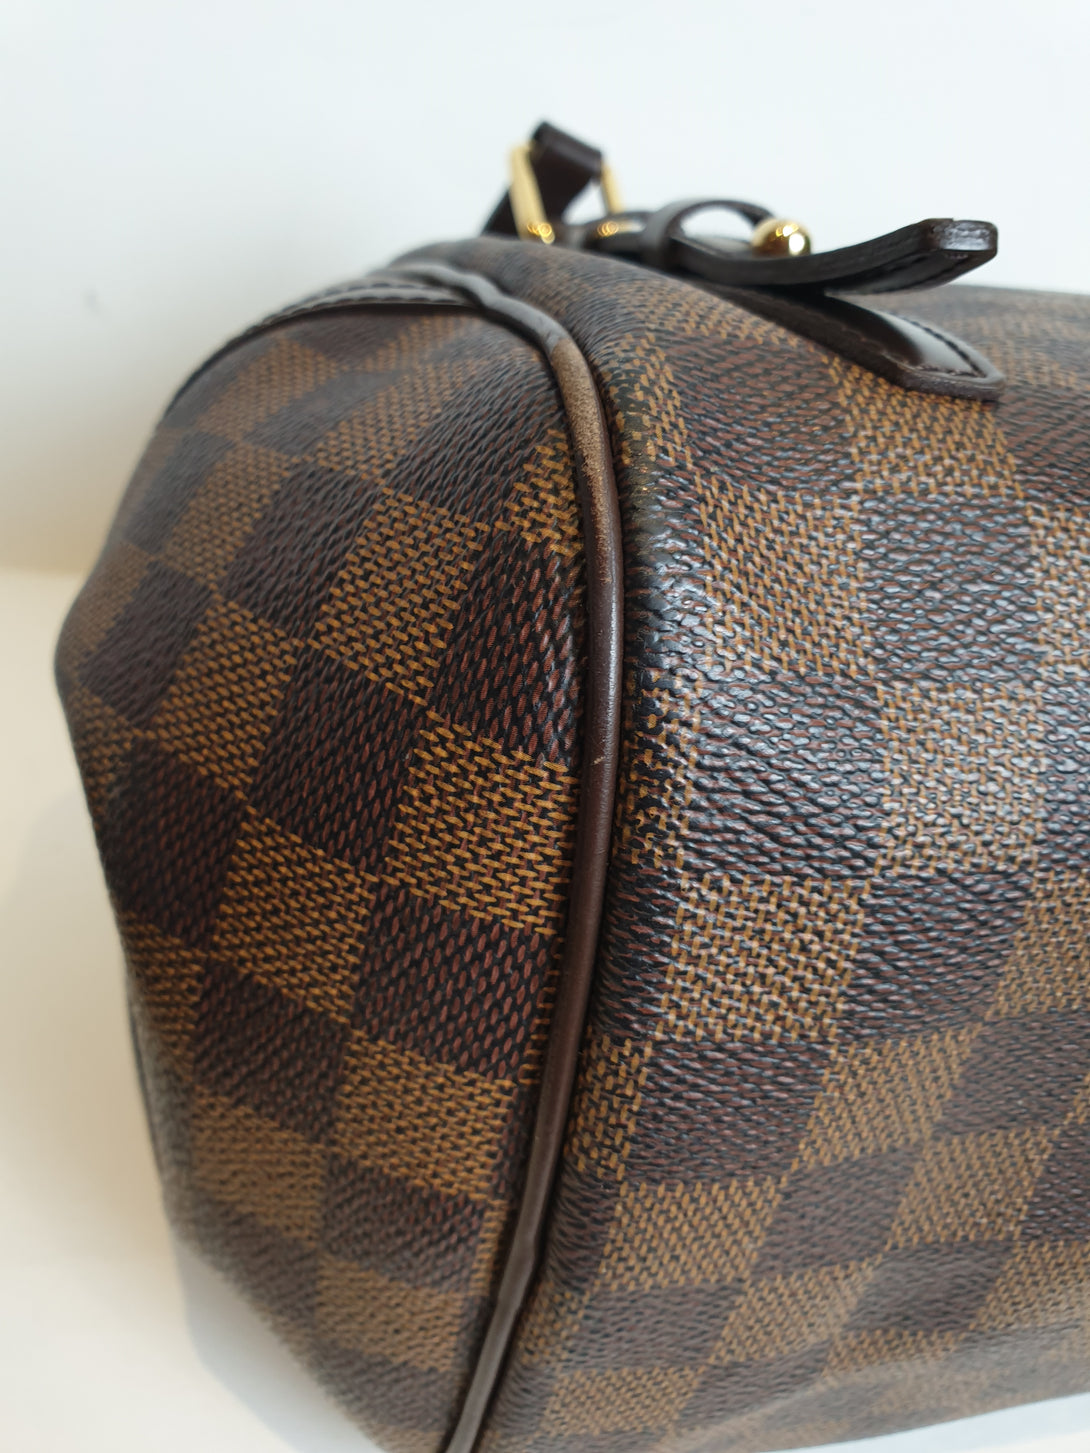 Louis Vuitton "Rivington GM" Damier Handbag - As Seen on Instagram 2/08/20 - Siopaella Designer Exchange